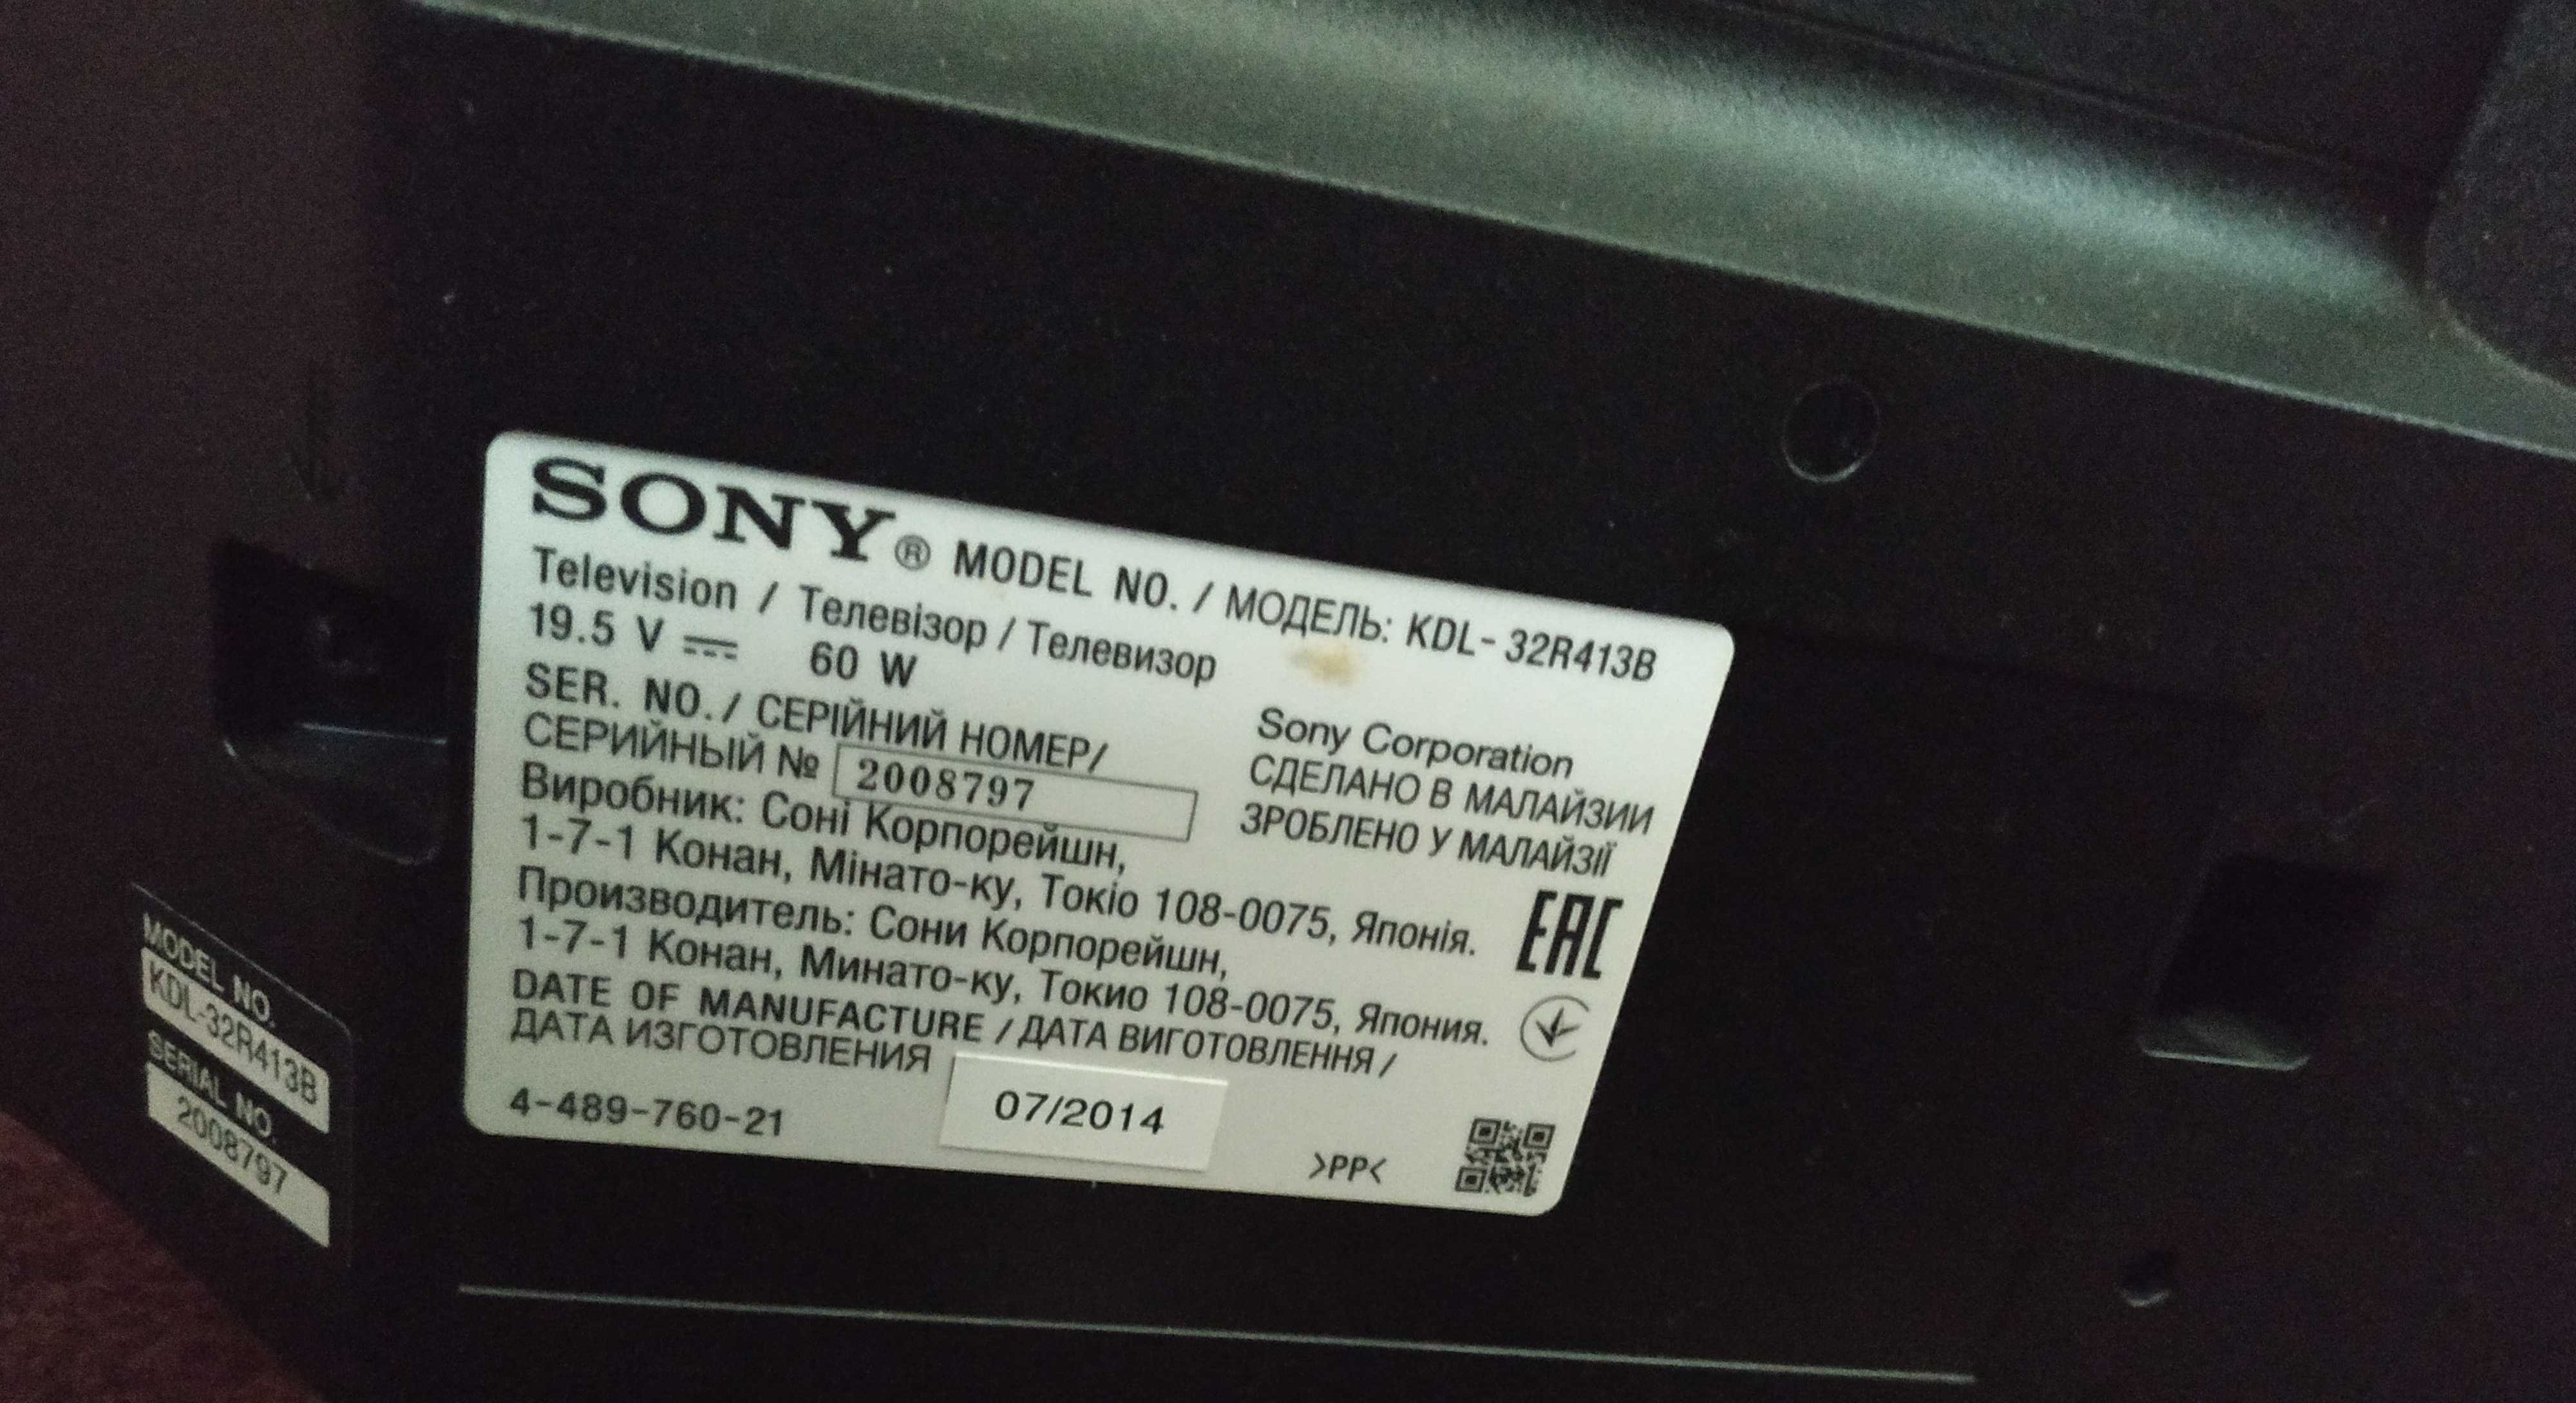 Sony KDL-32R413b Подсветка lg innotek 32inch wxga ndsoem Подставка